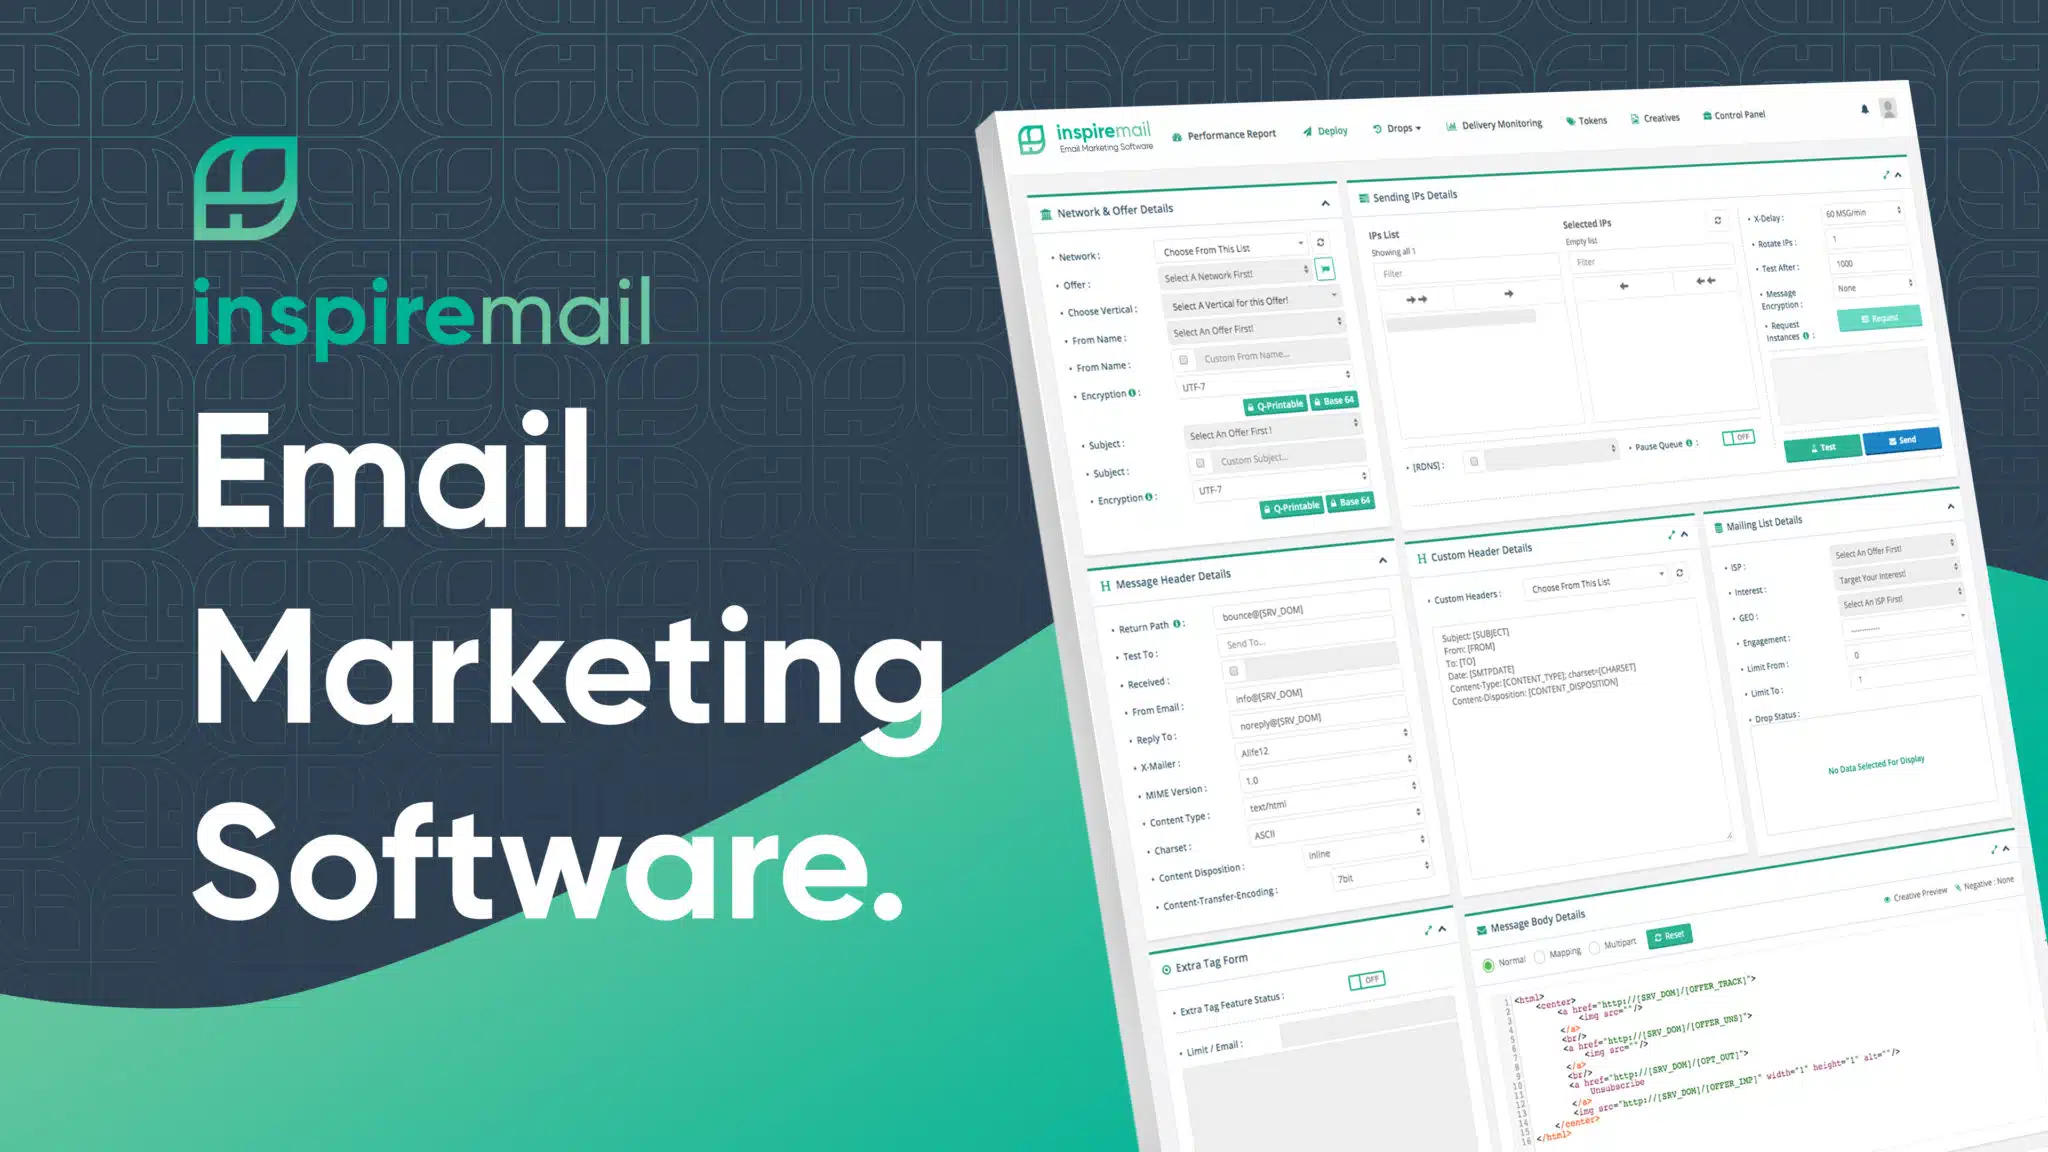 Email Marketing Software â€“ Introducing INSPIREMAIL - Rekblog.com